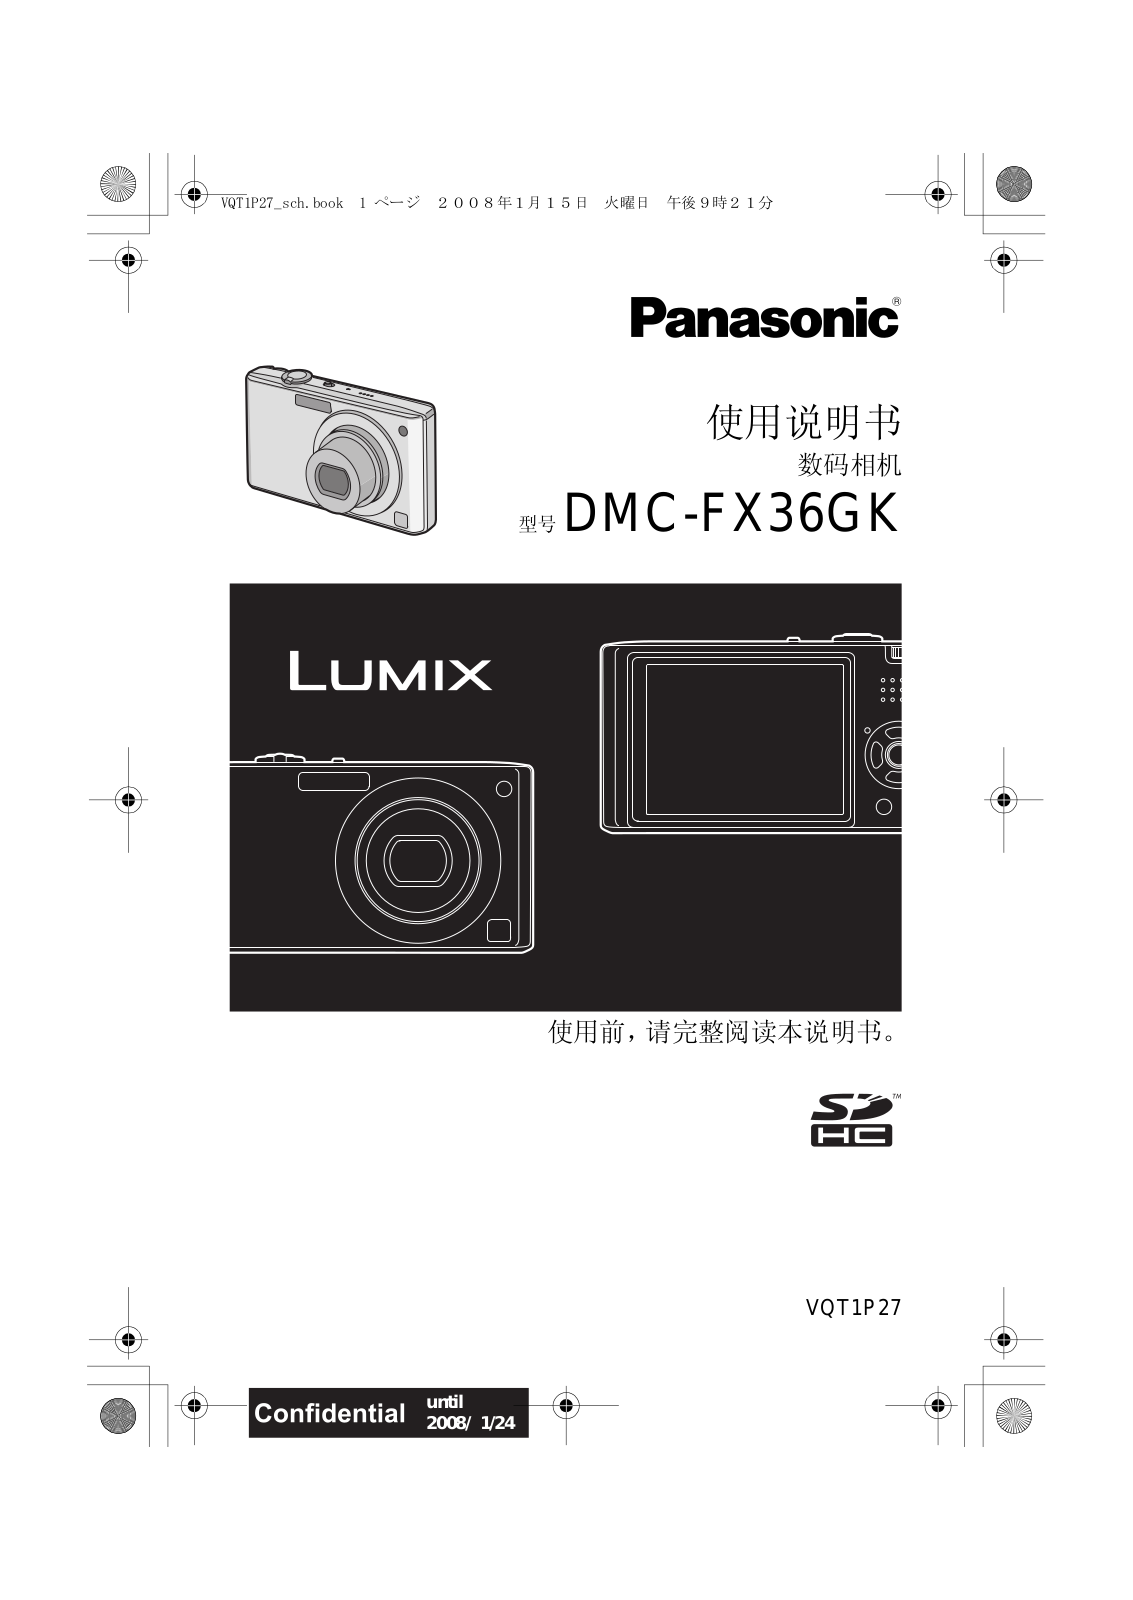 Panasonic DMC-FX36GK User Manual